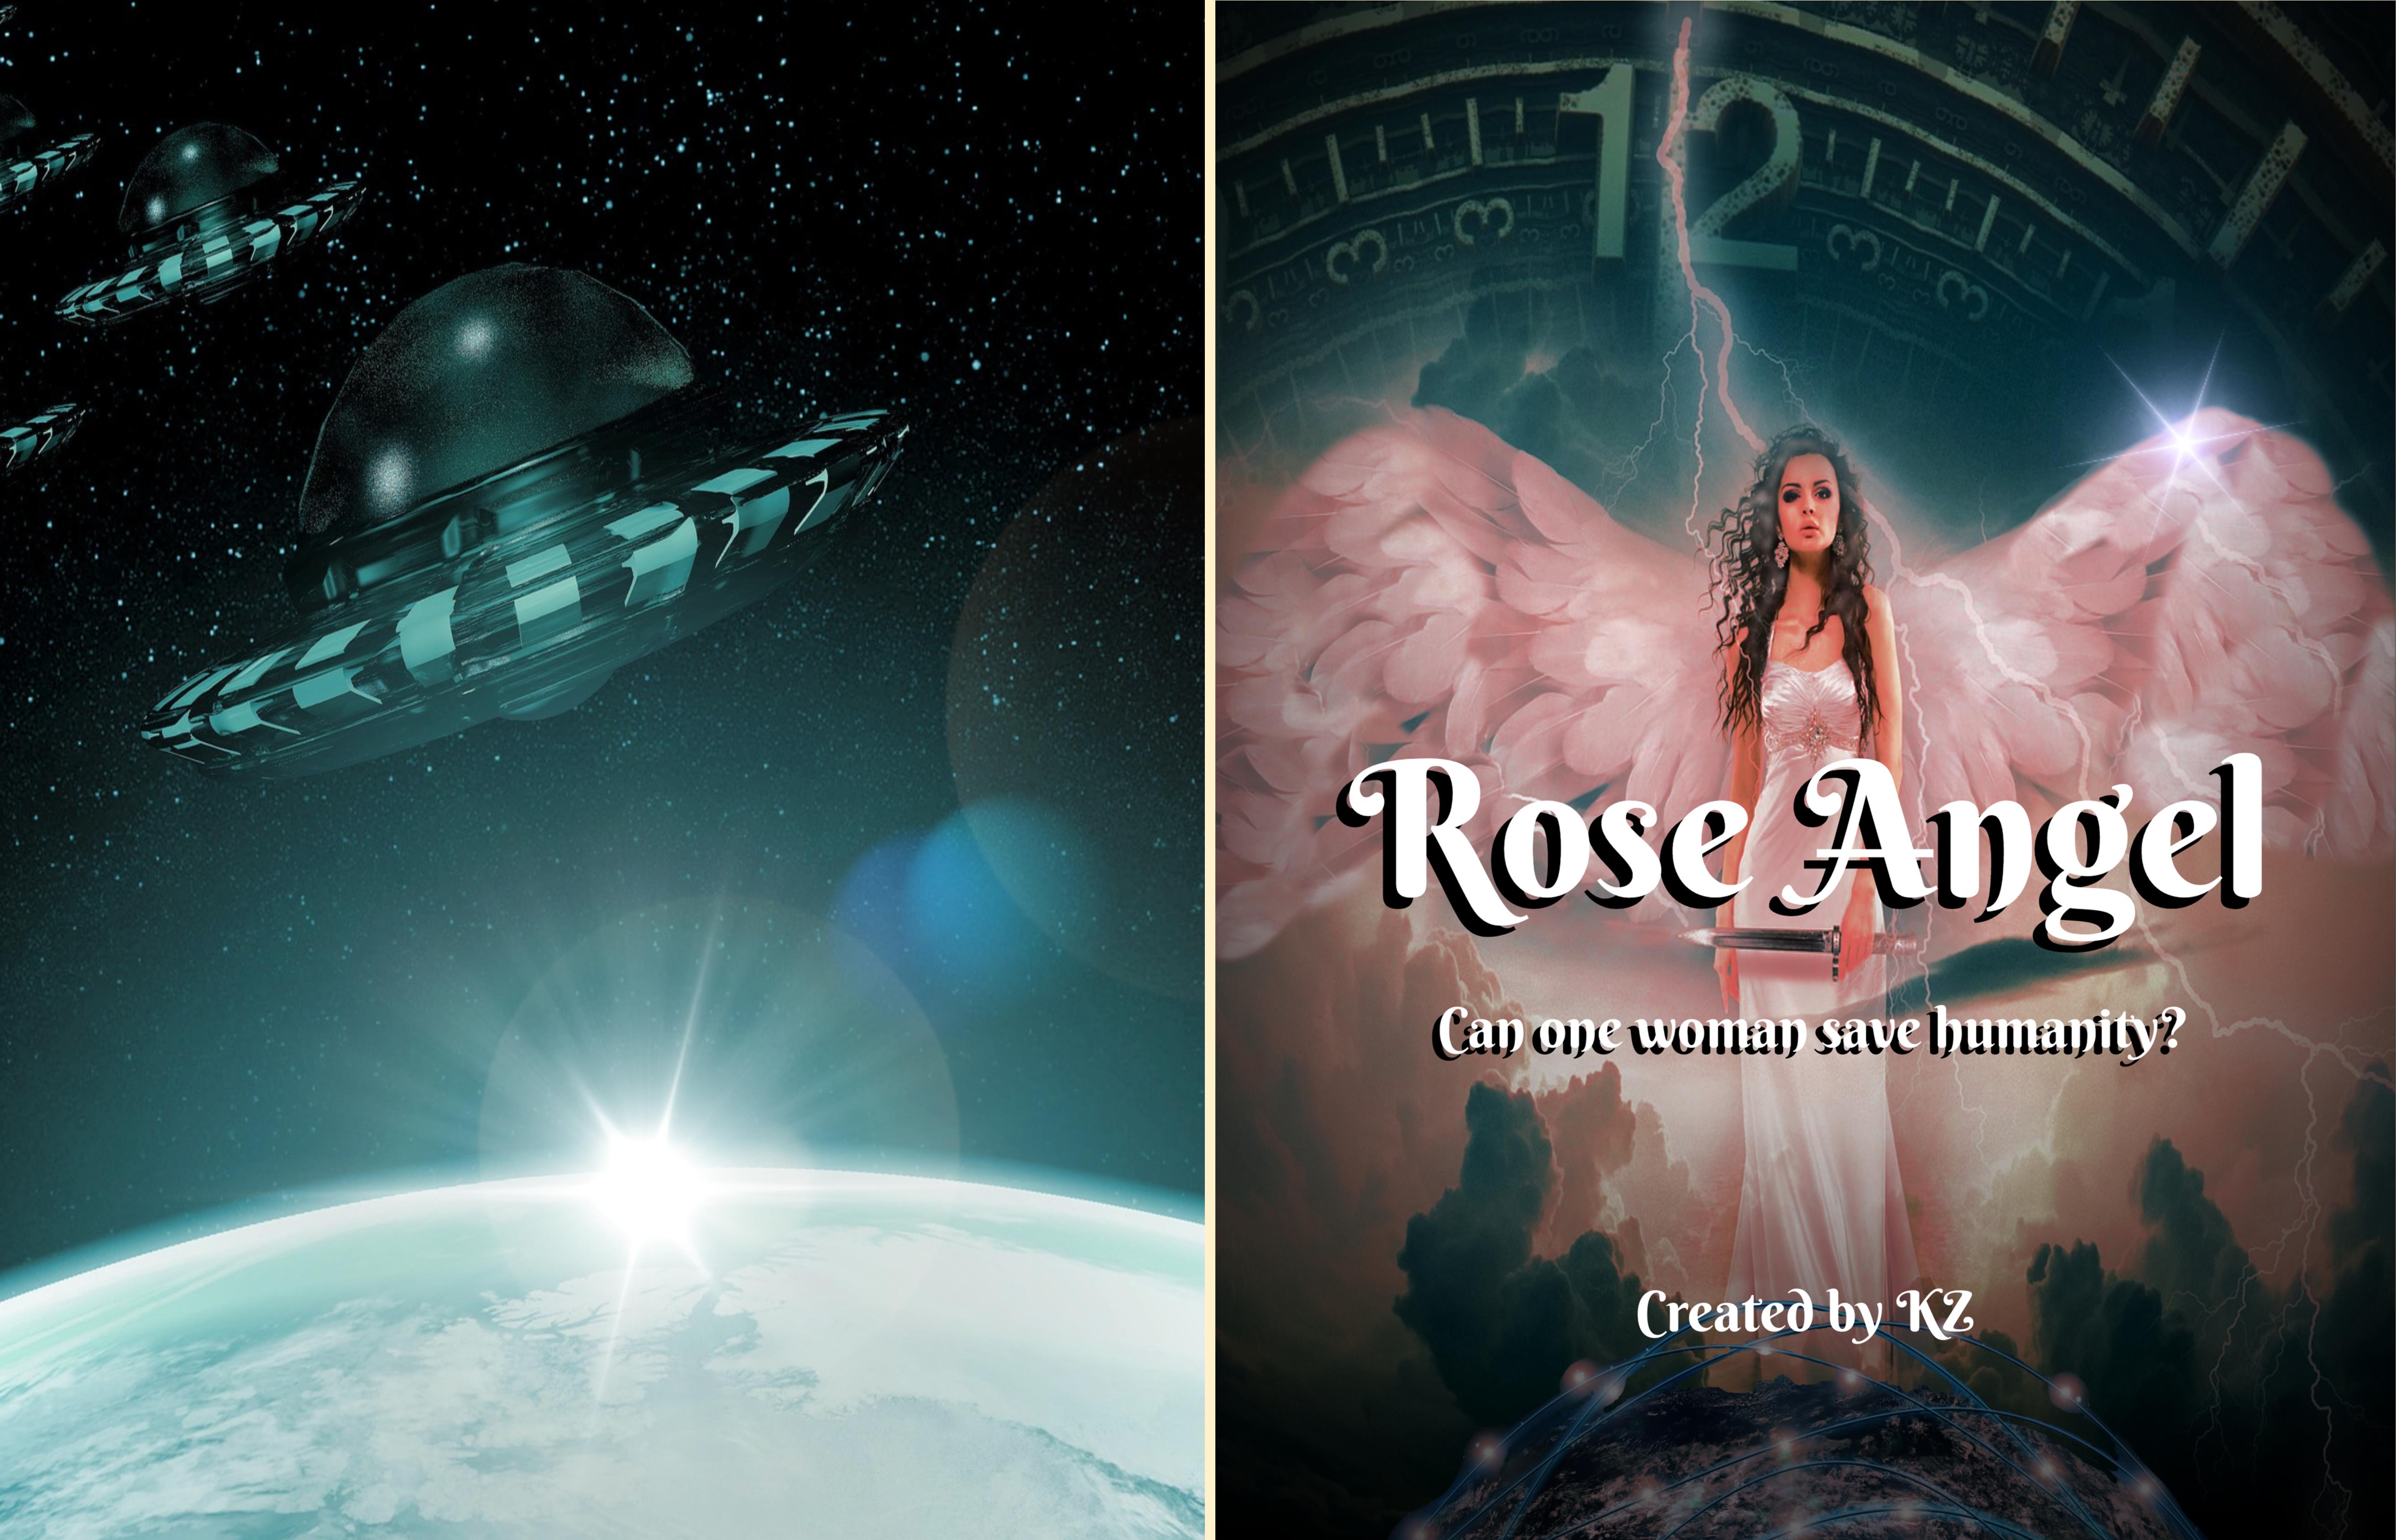 Rose Angel (Script) cover image